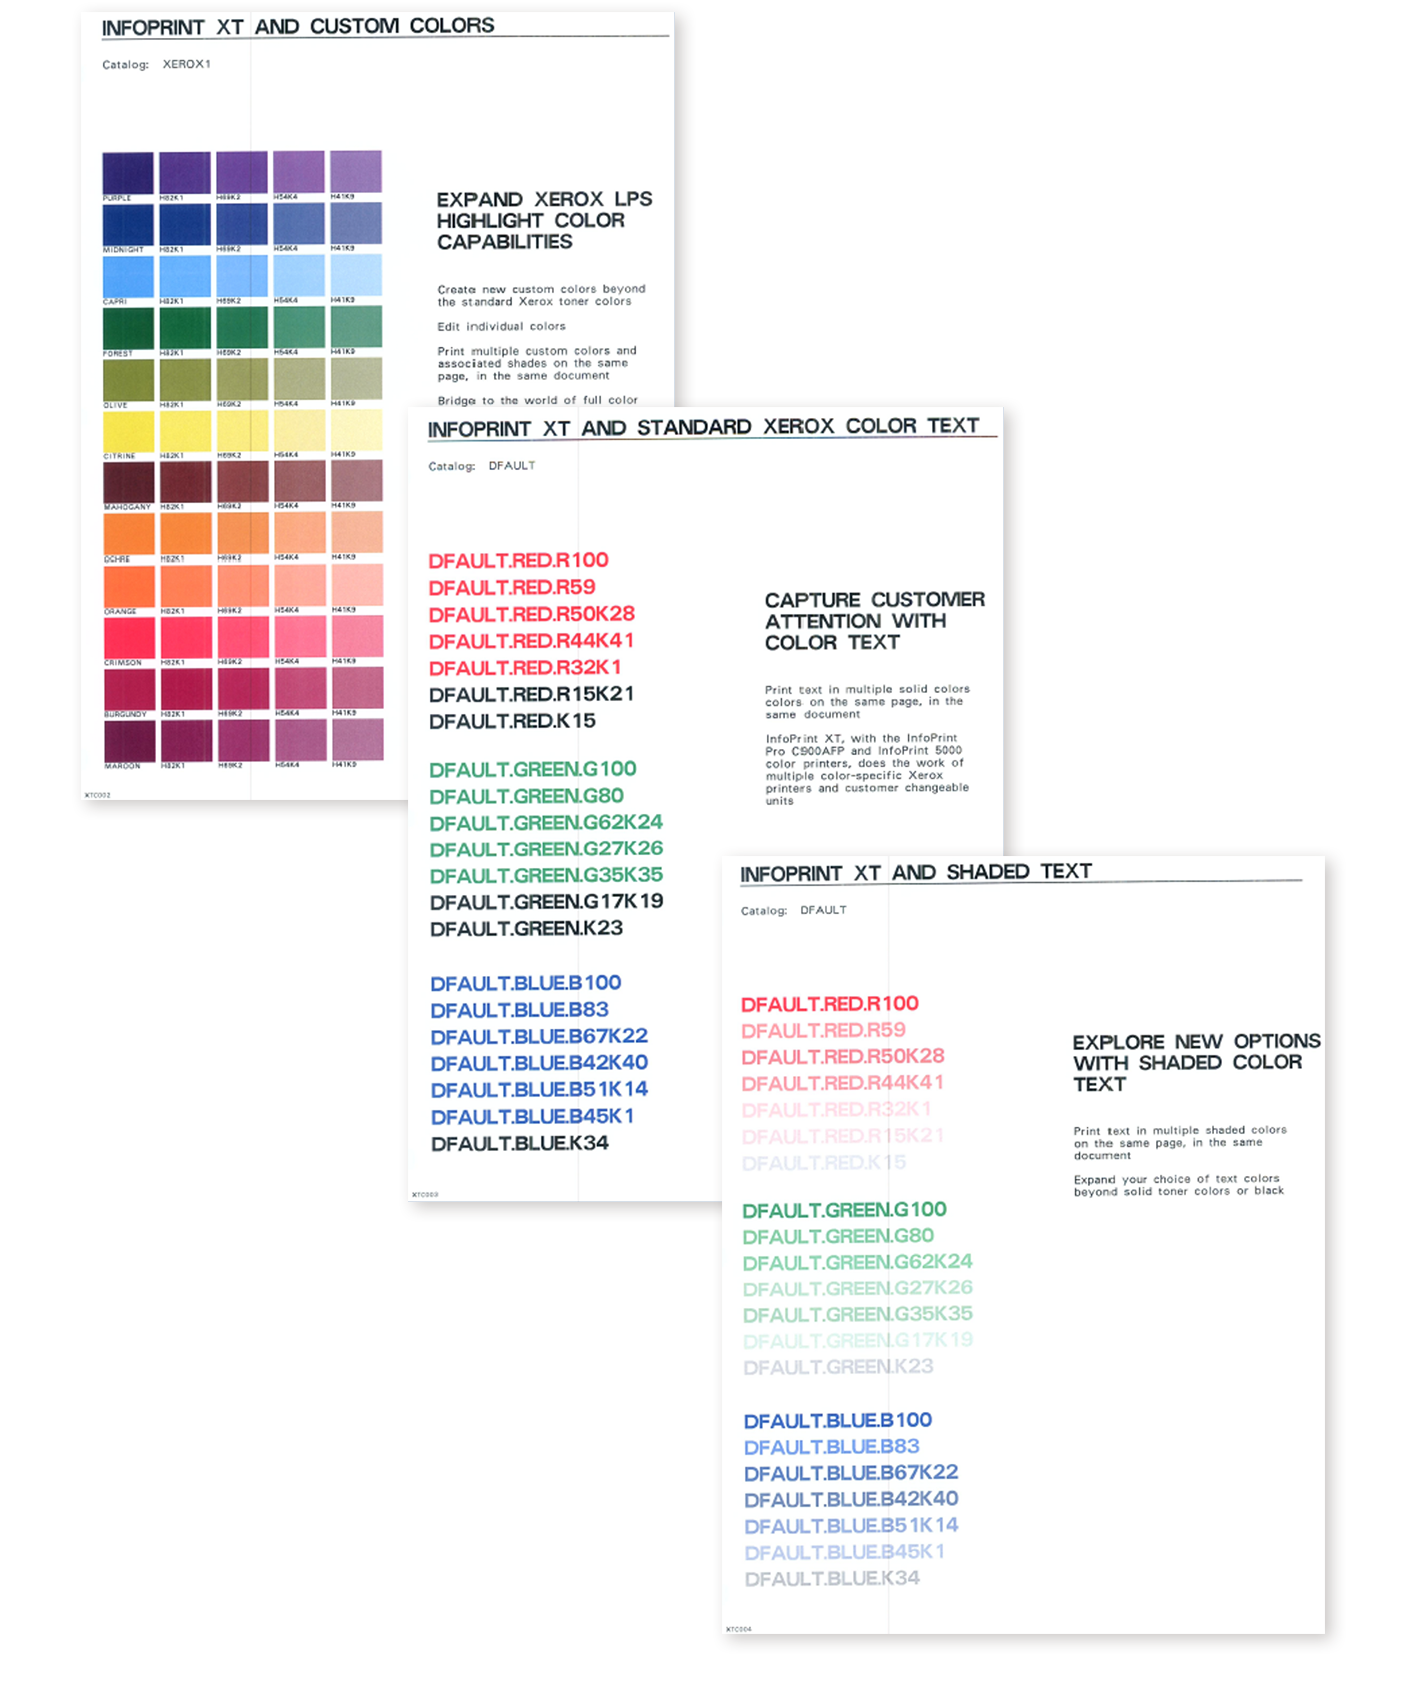 Inforprint XT brochure showing it's coloring capabilities